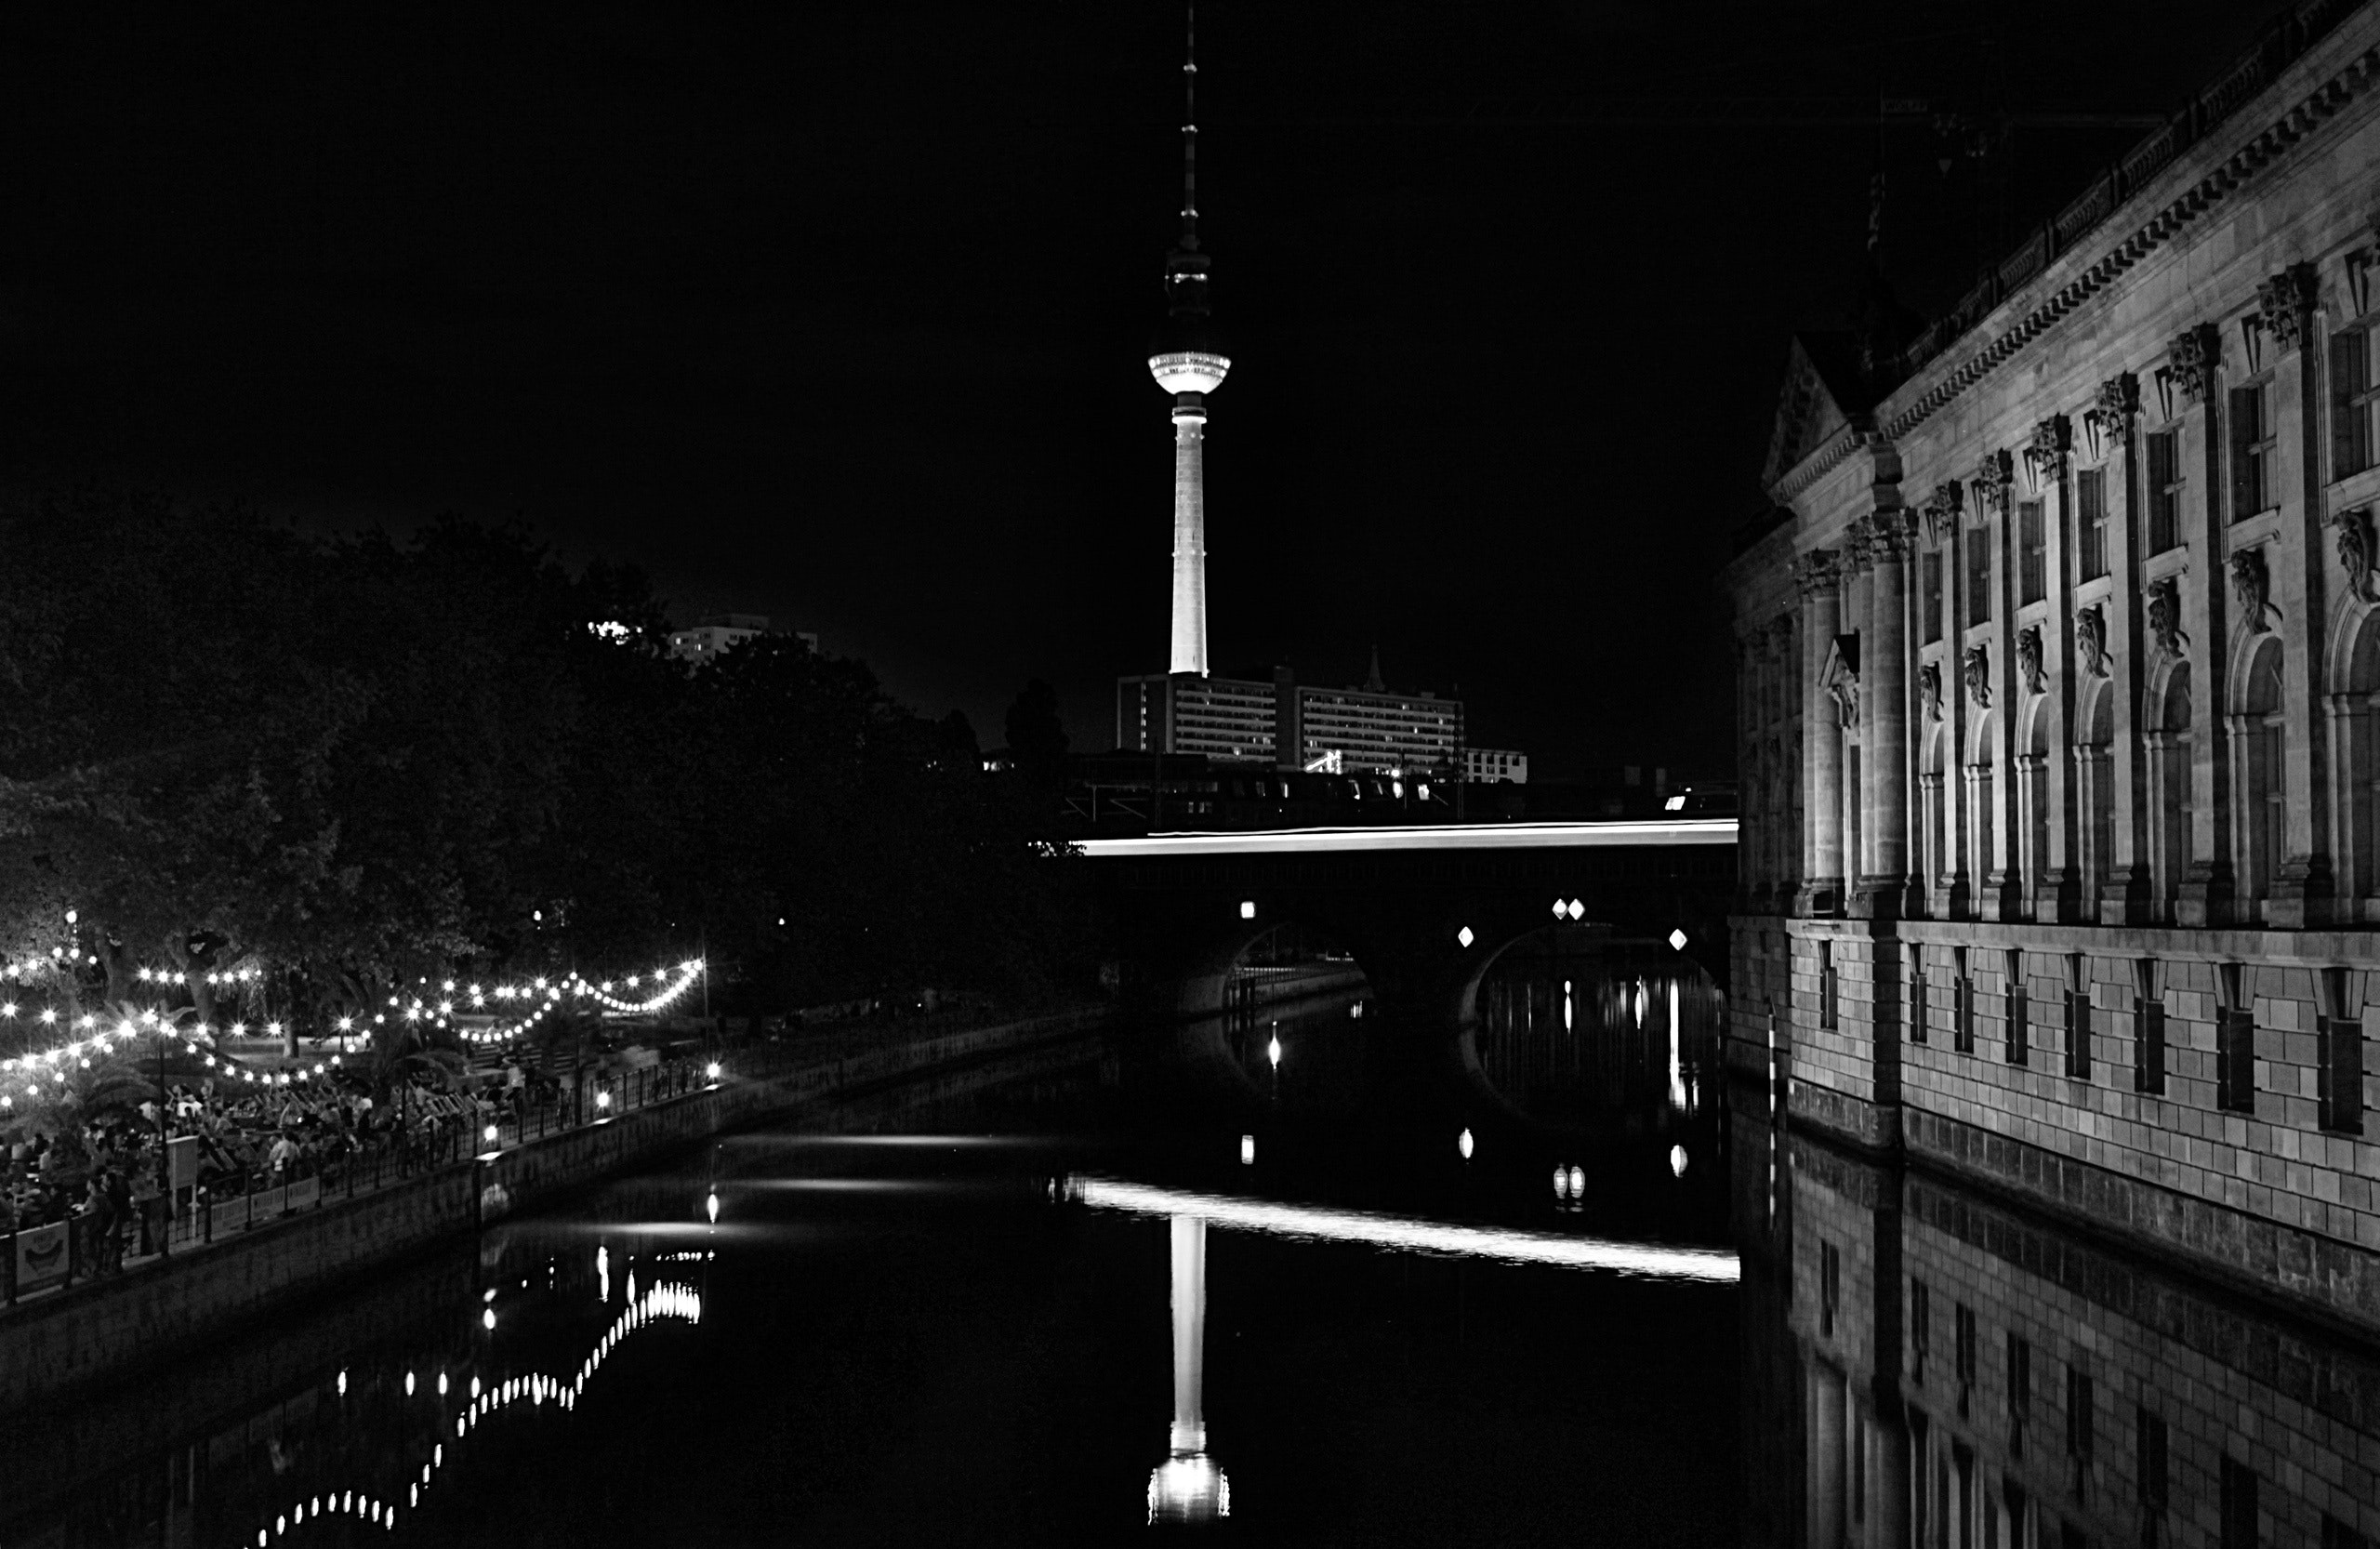 cc0 pexels https://www.pexels.com/photo/alexanderplatz-architecture-berlin-bridge-275502/